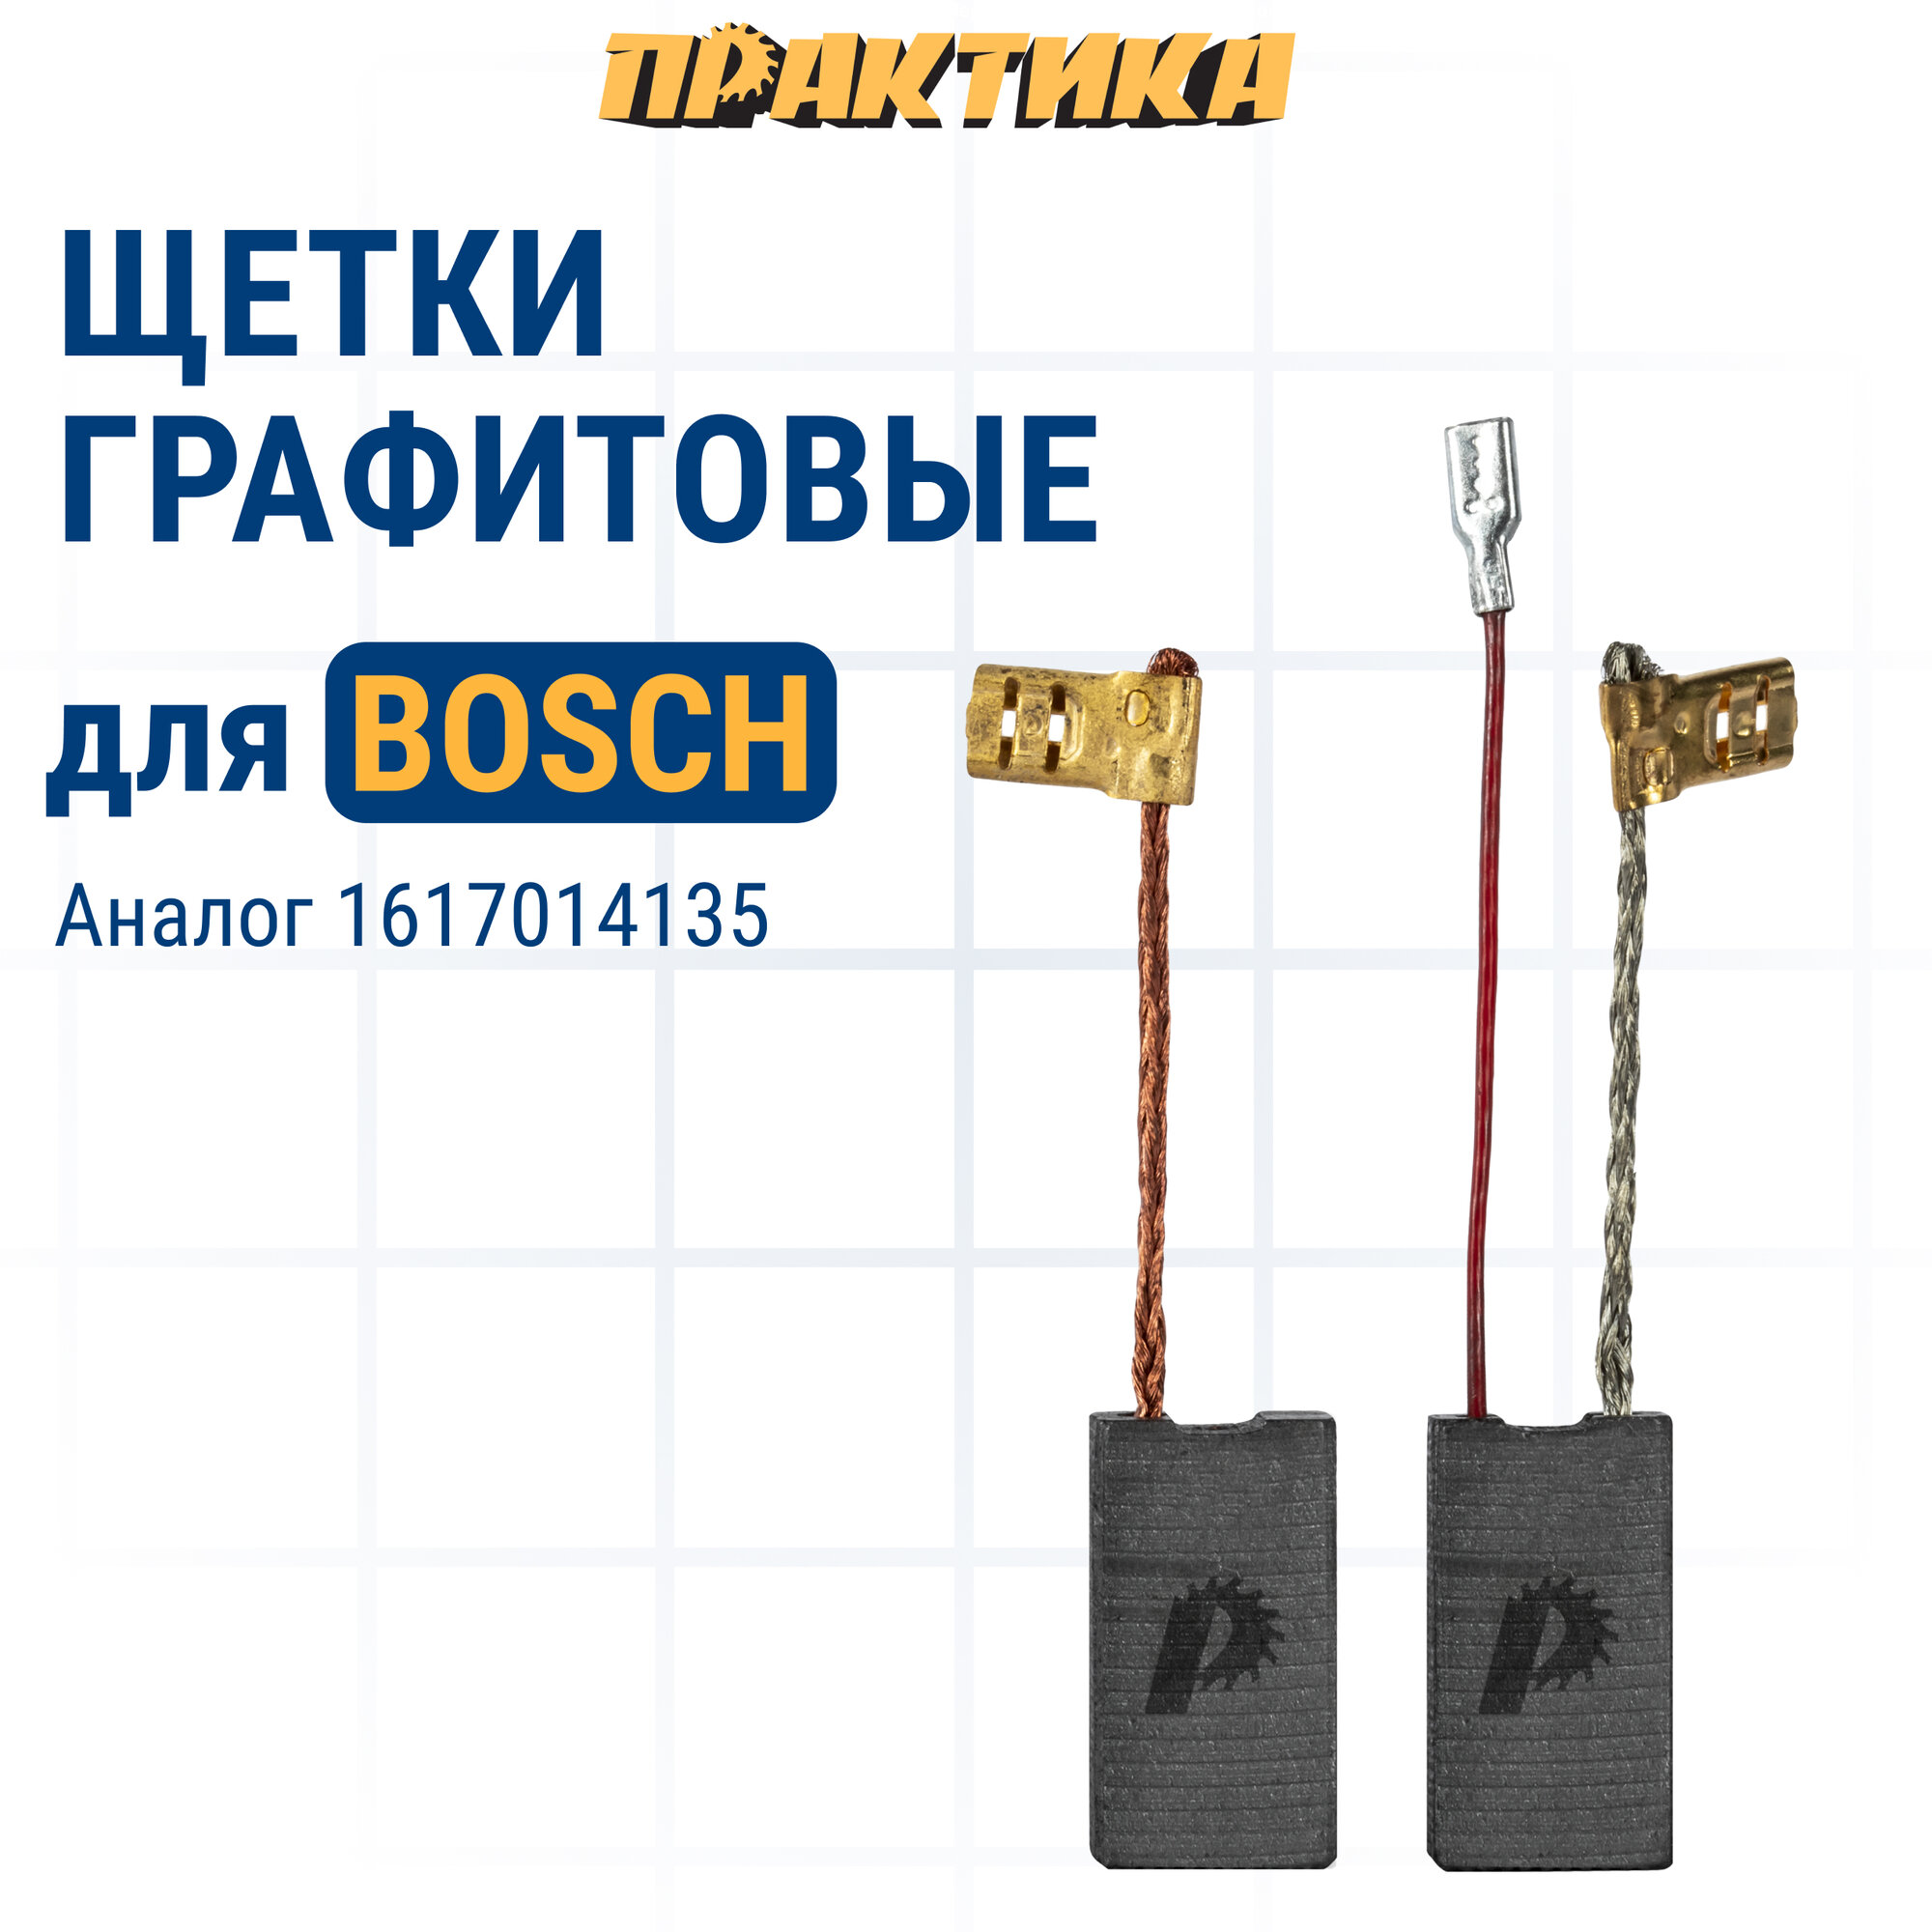 Щетка графитовая ПРАКТИКА для BOSCH (аналог 1617014135) 62x125x23 мм автостоп (790-823)